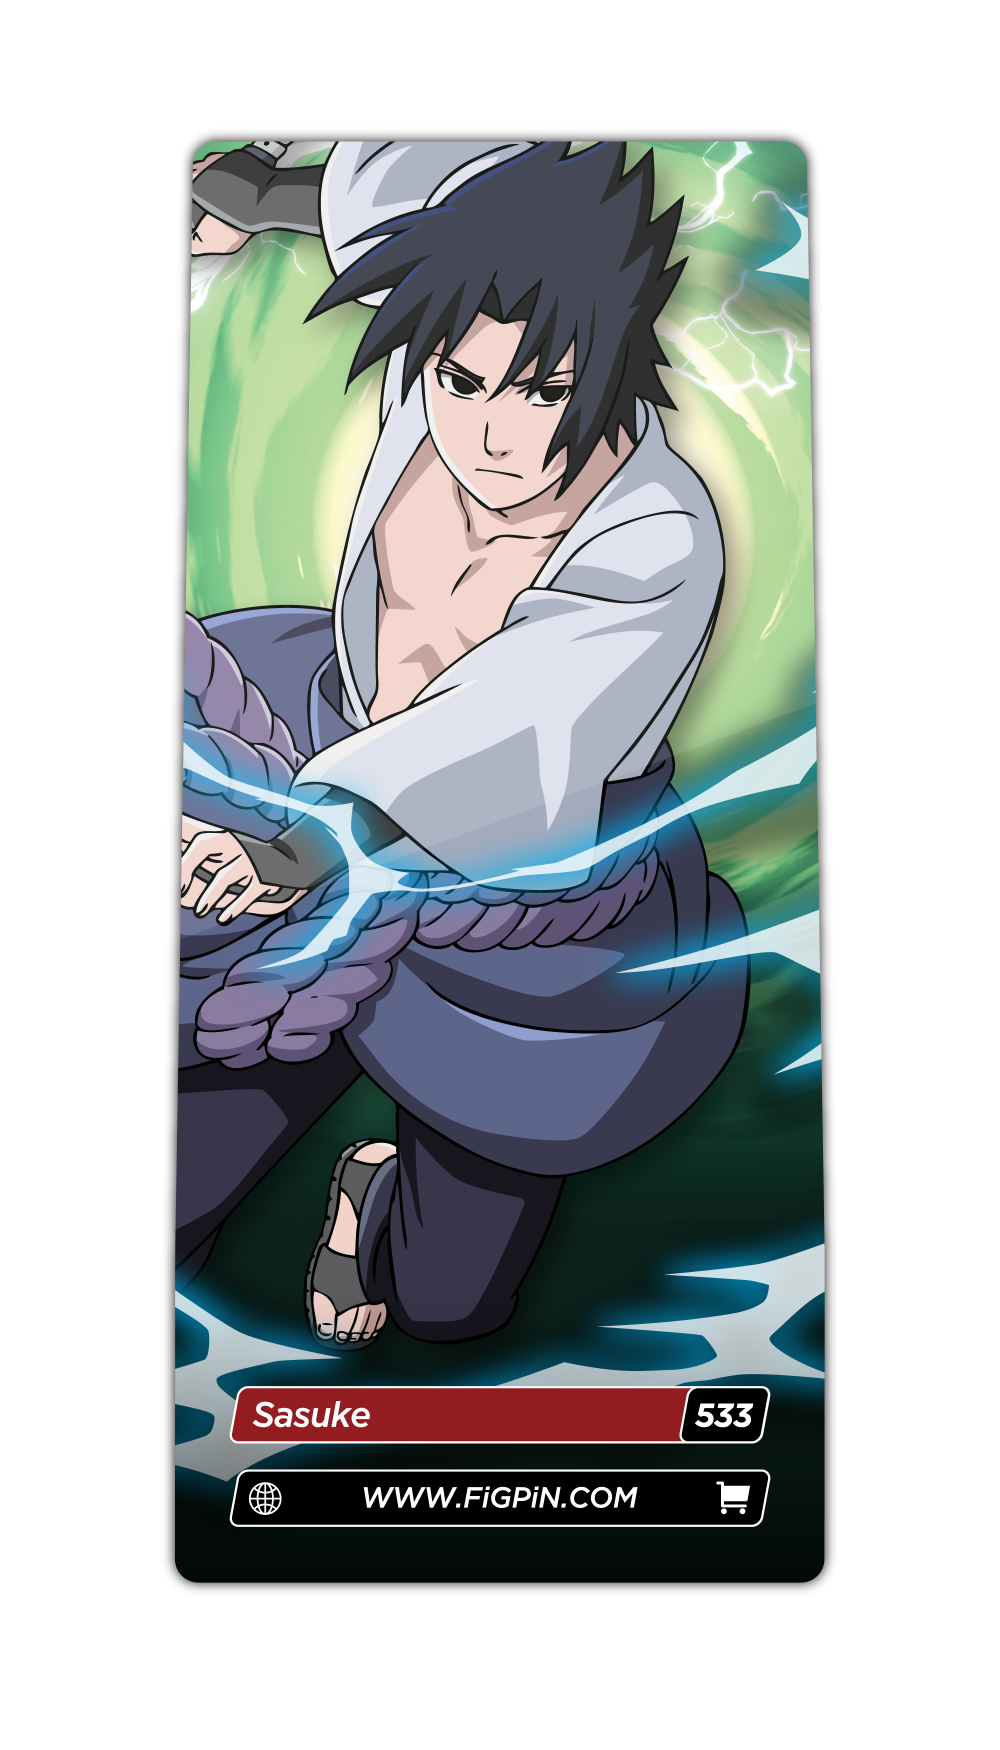 Sasuke (533)